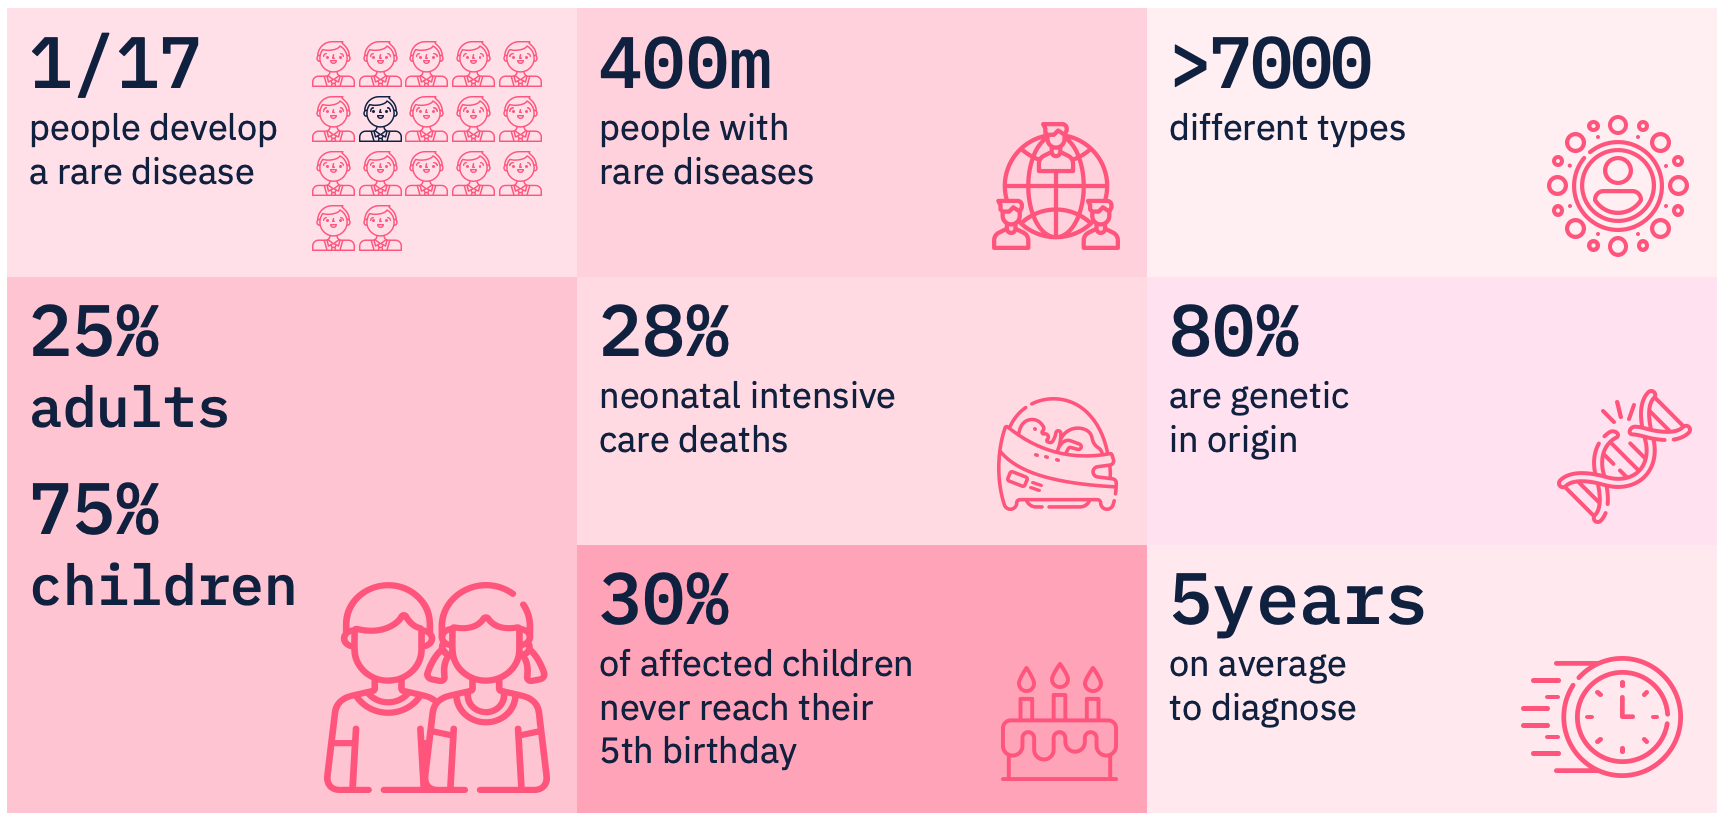 Congenica-rare-disease-facts